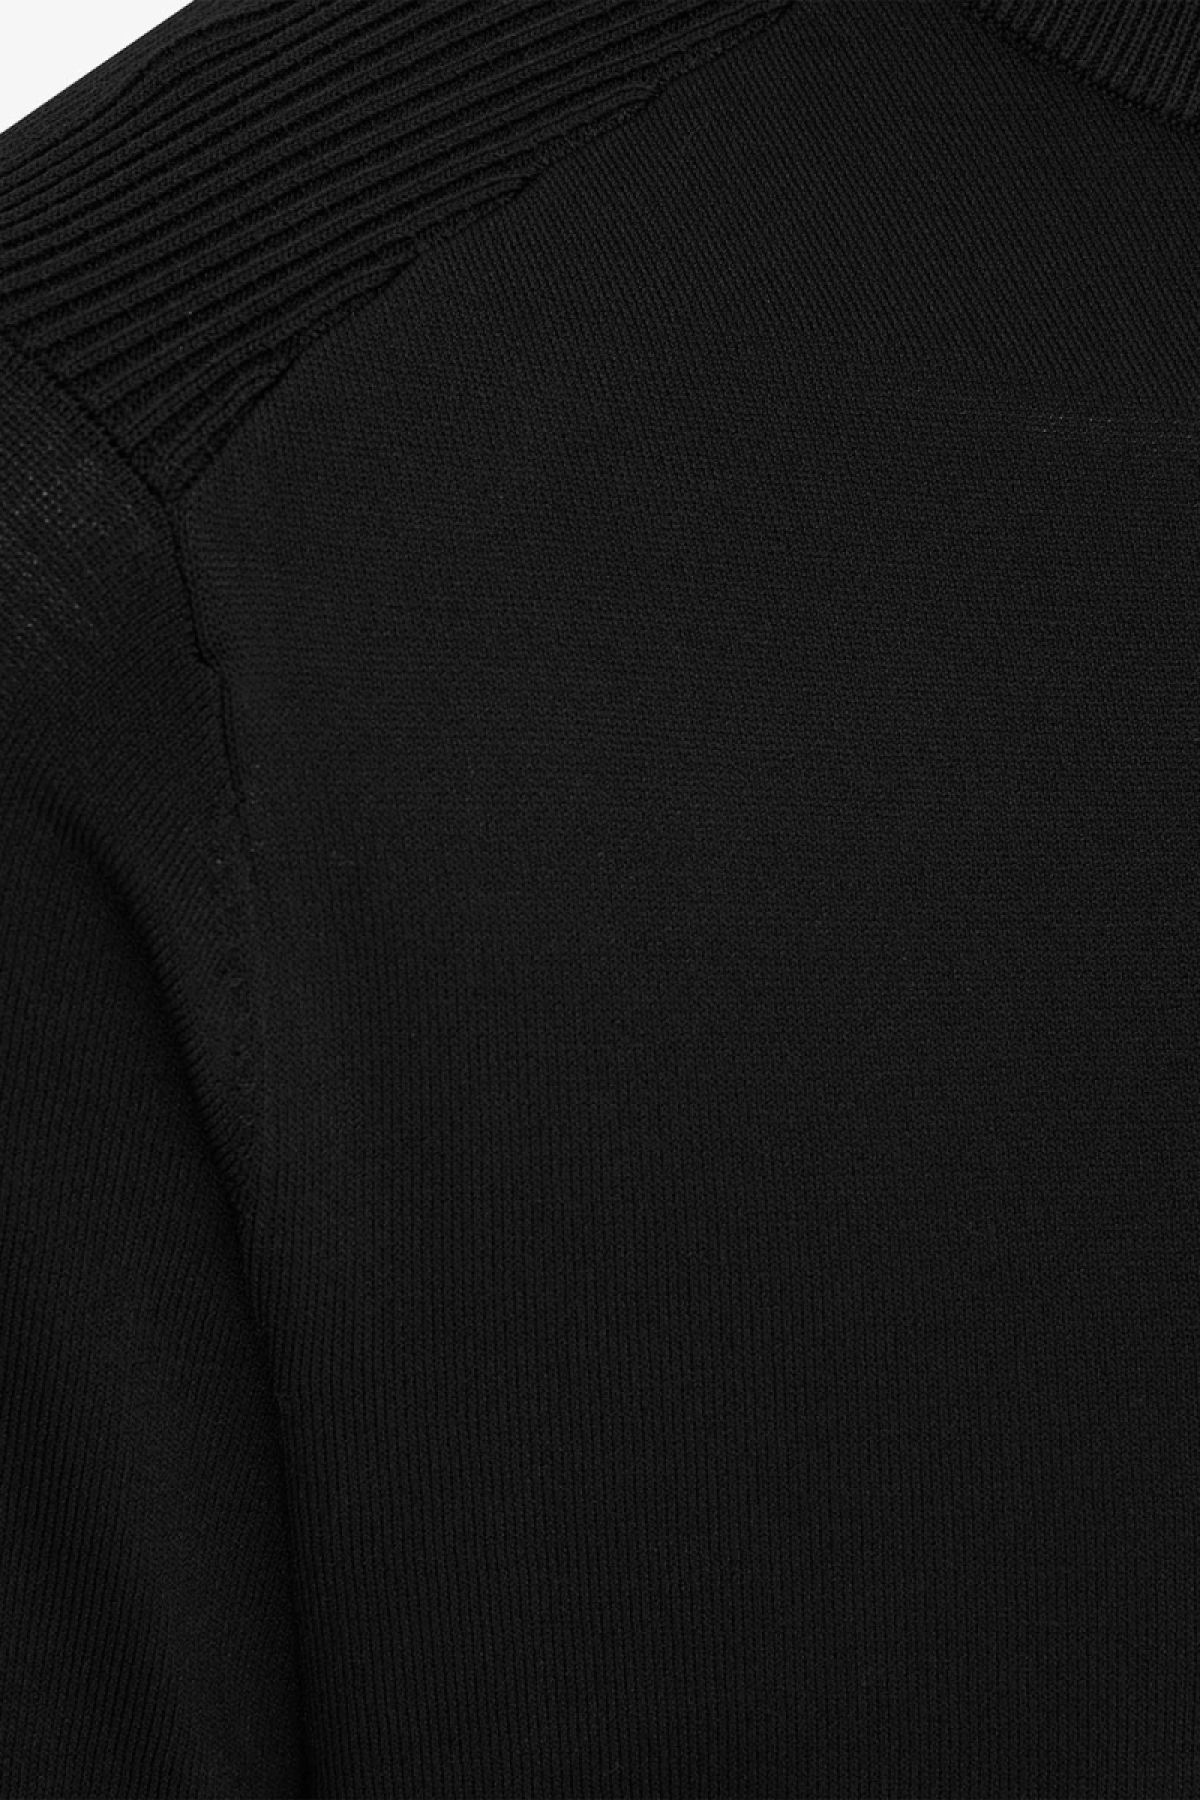 Cool dry pullover zwart